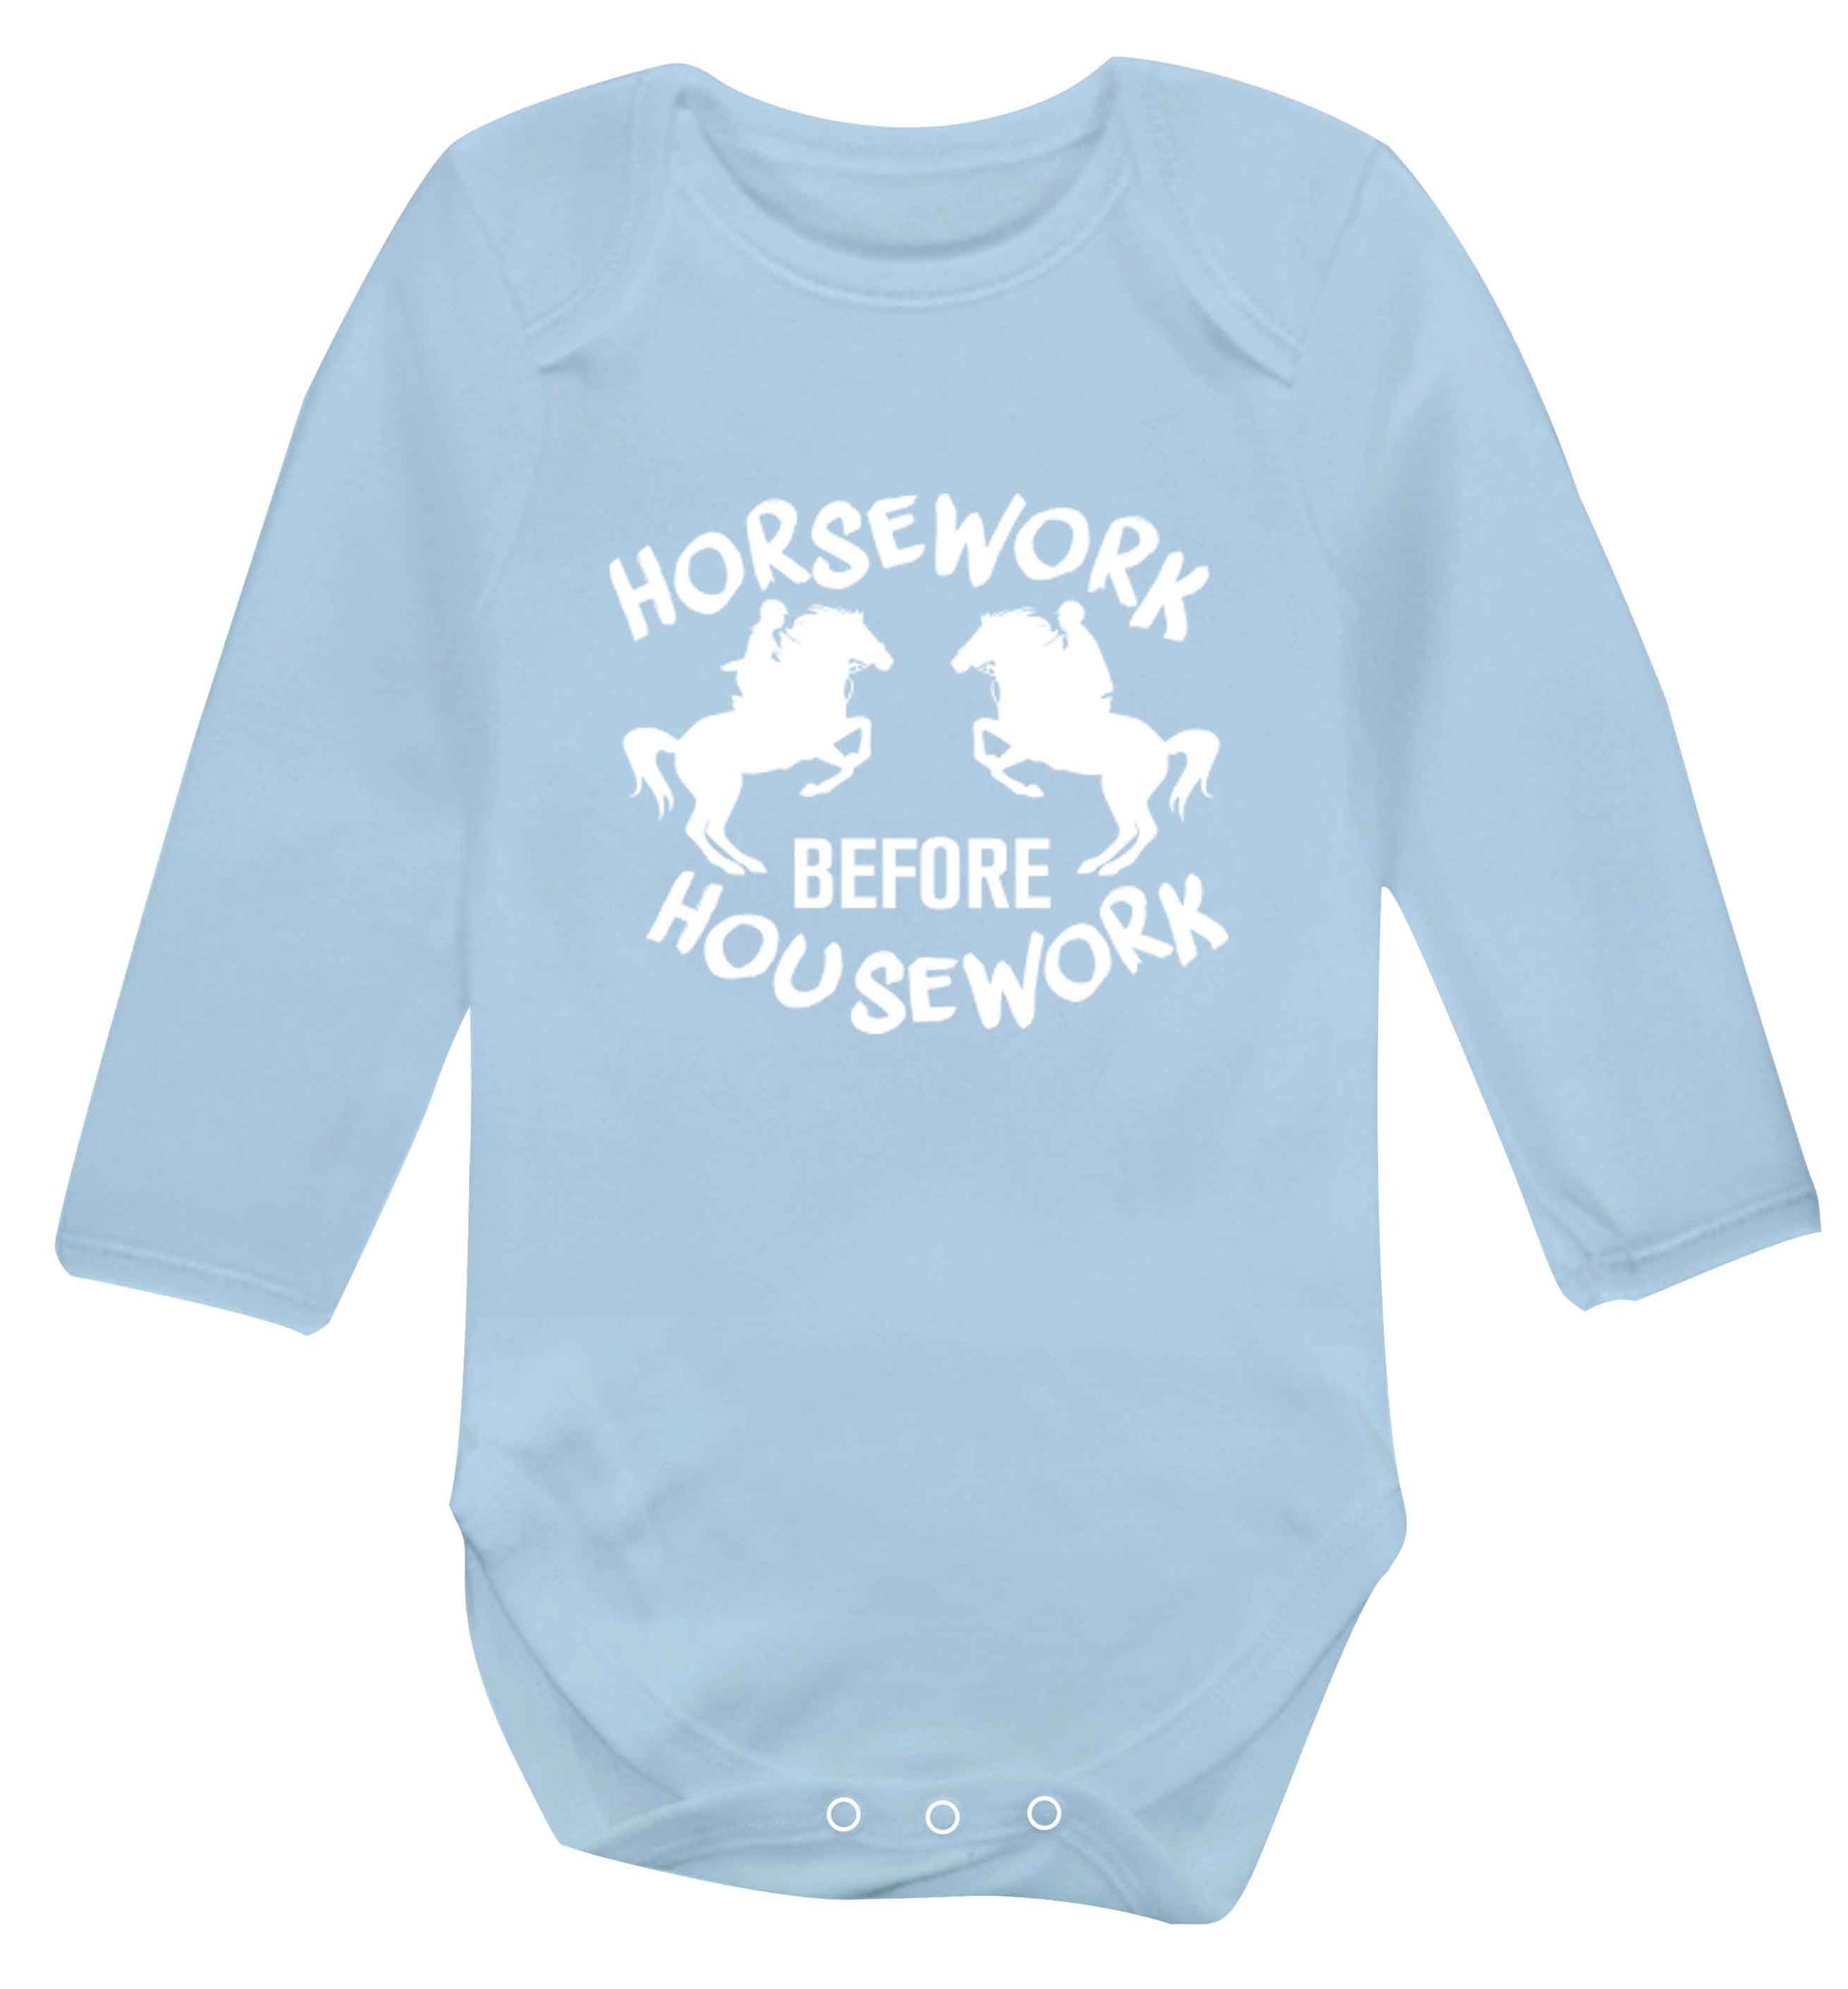 Horsework before housework baby vest long sleeved pale blue 6-12 months